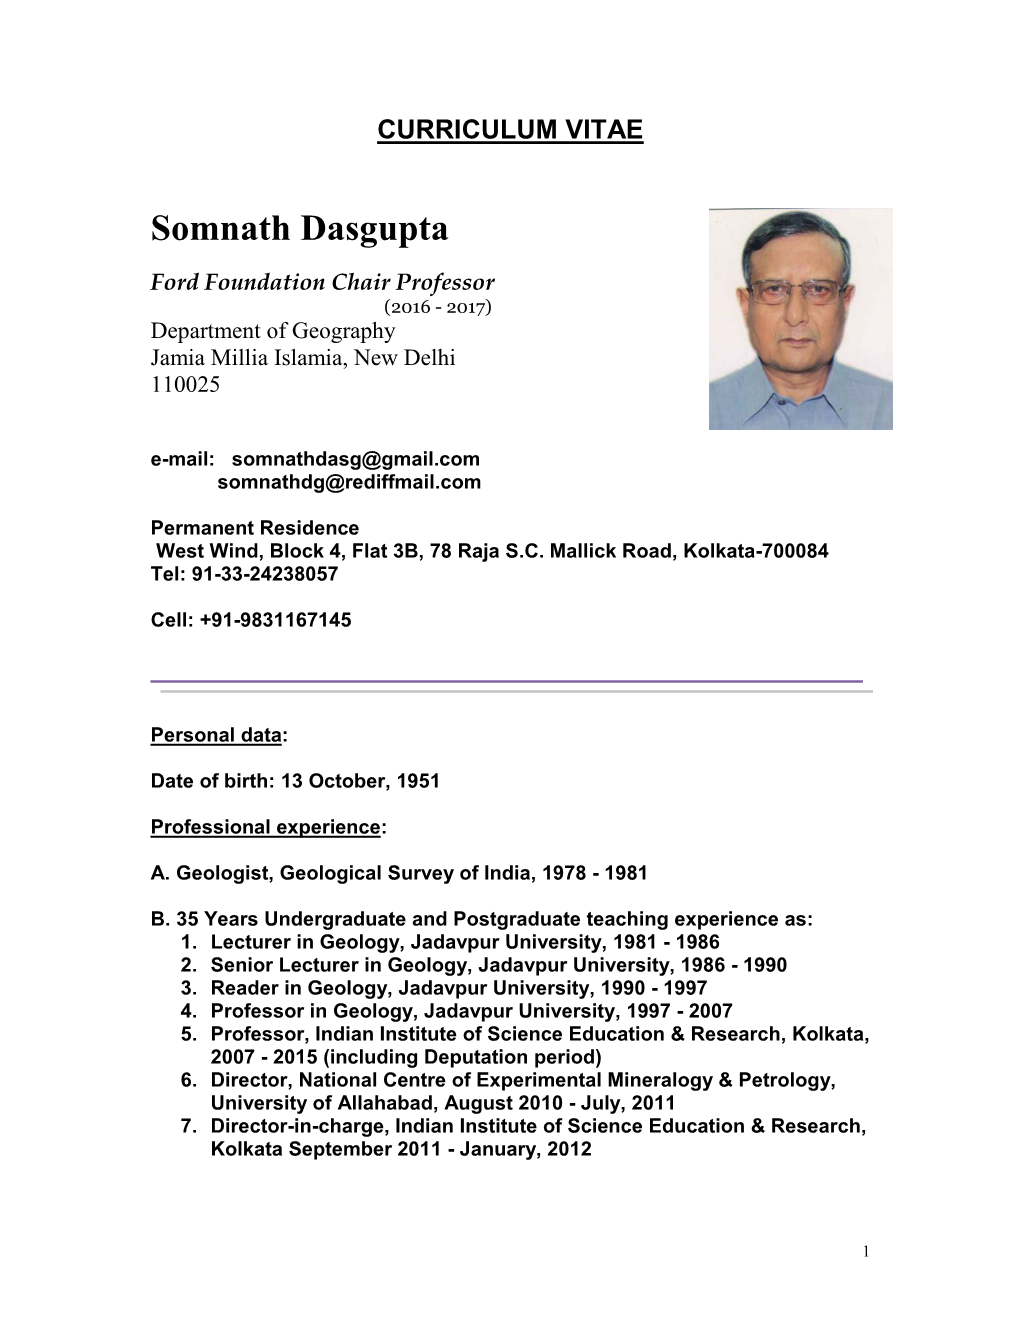 Somnath Dasgupta Ford Foundation Chair Professor (2016 - 2017) Department of Geography Jamia Millia Islamia, New Delhi 110025